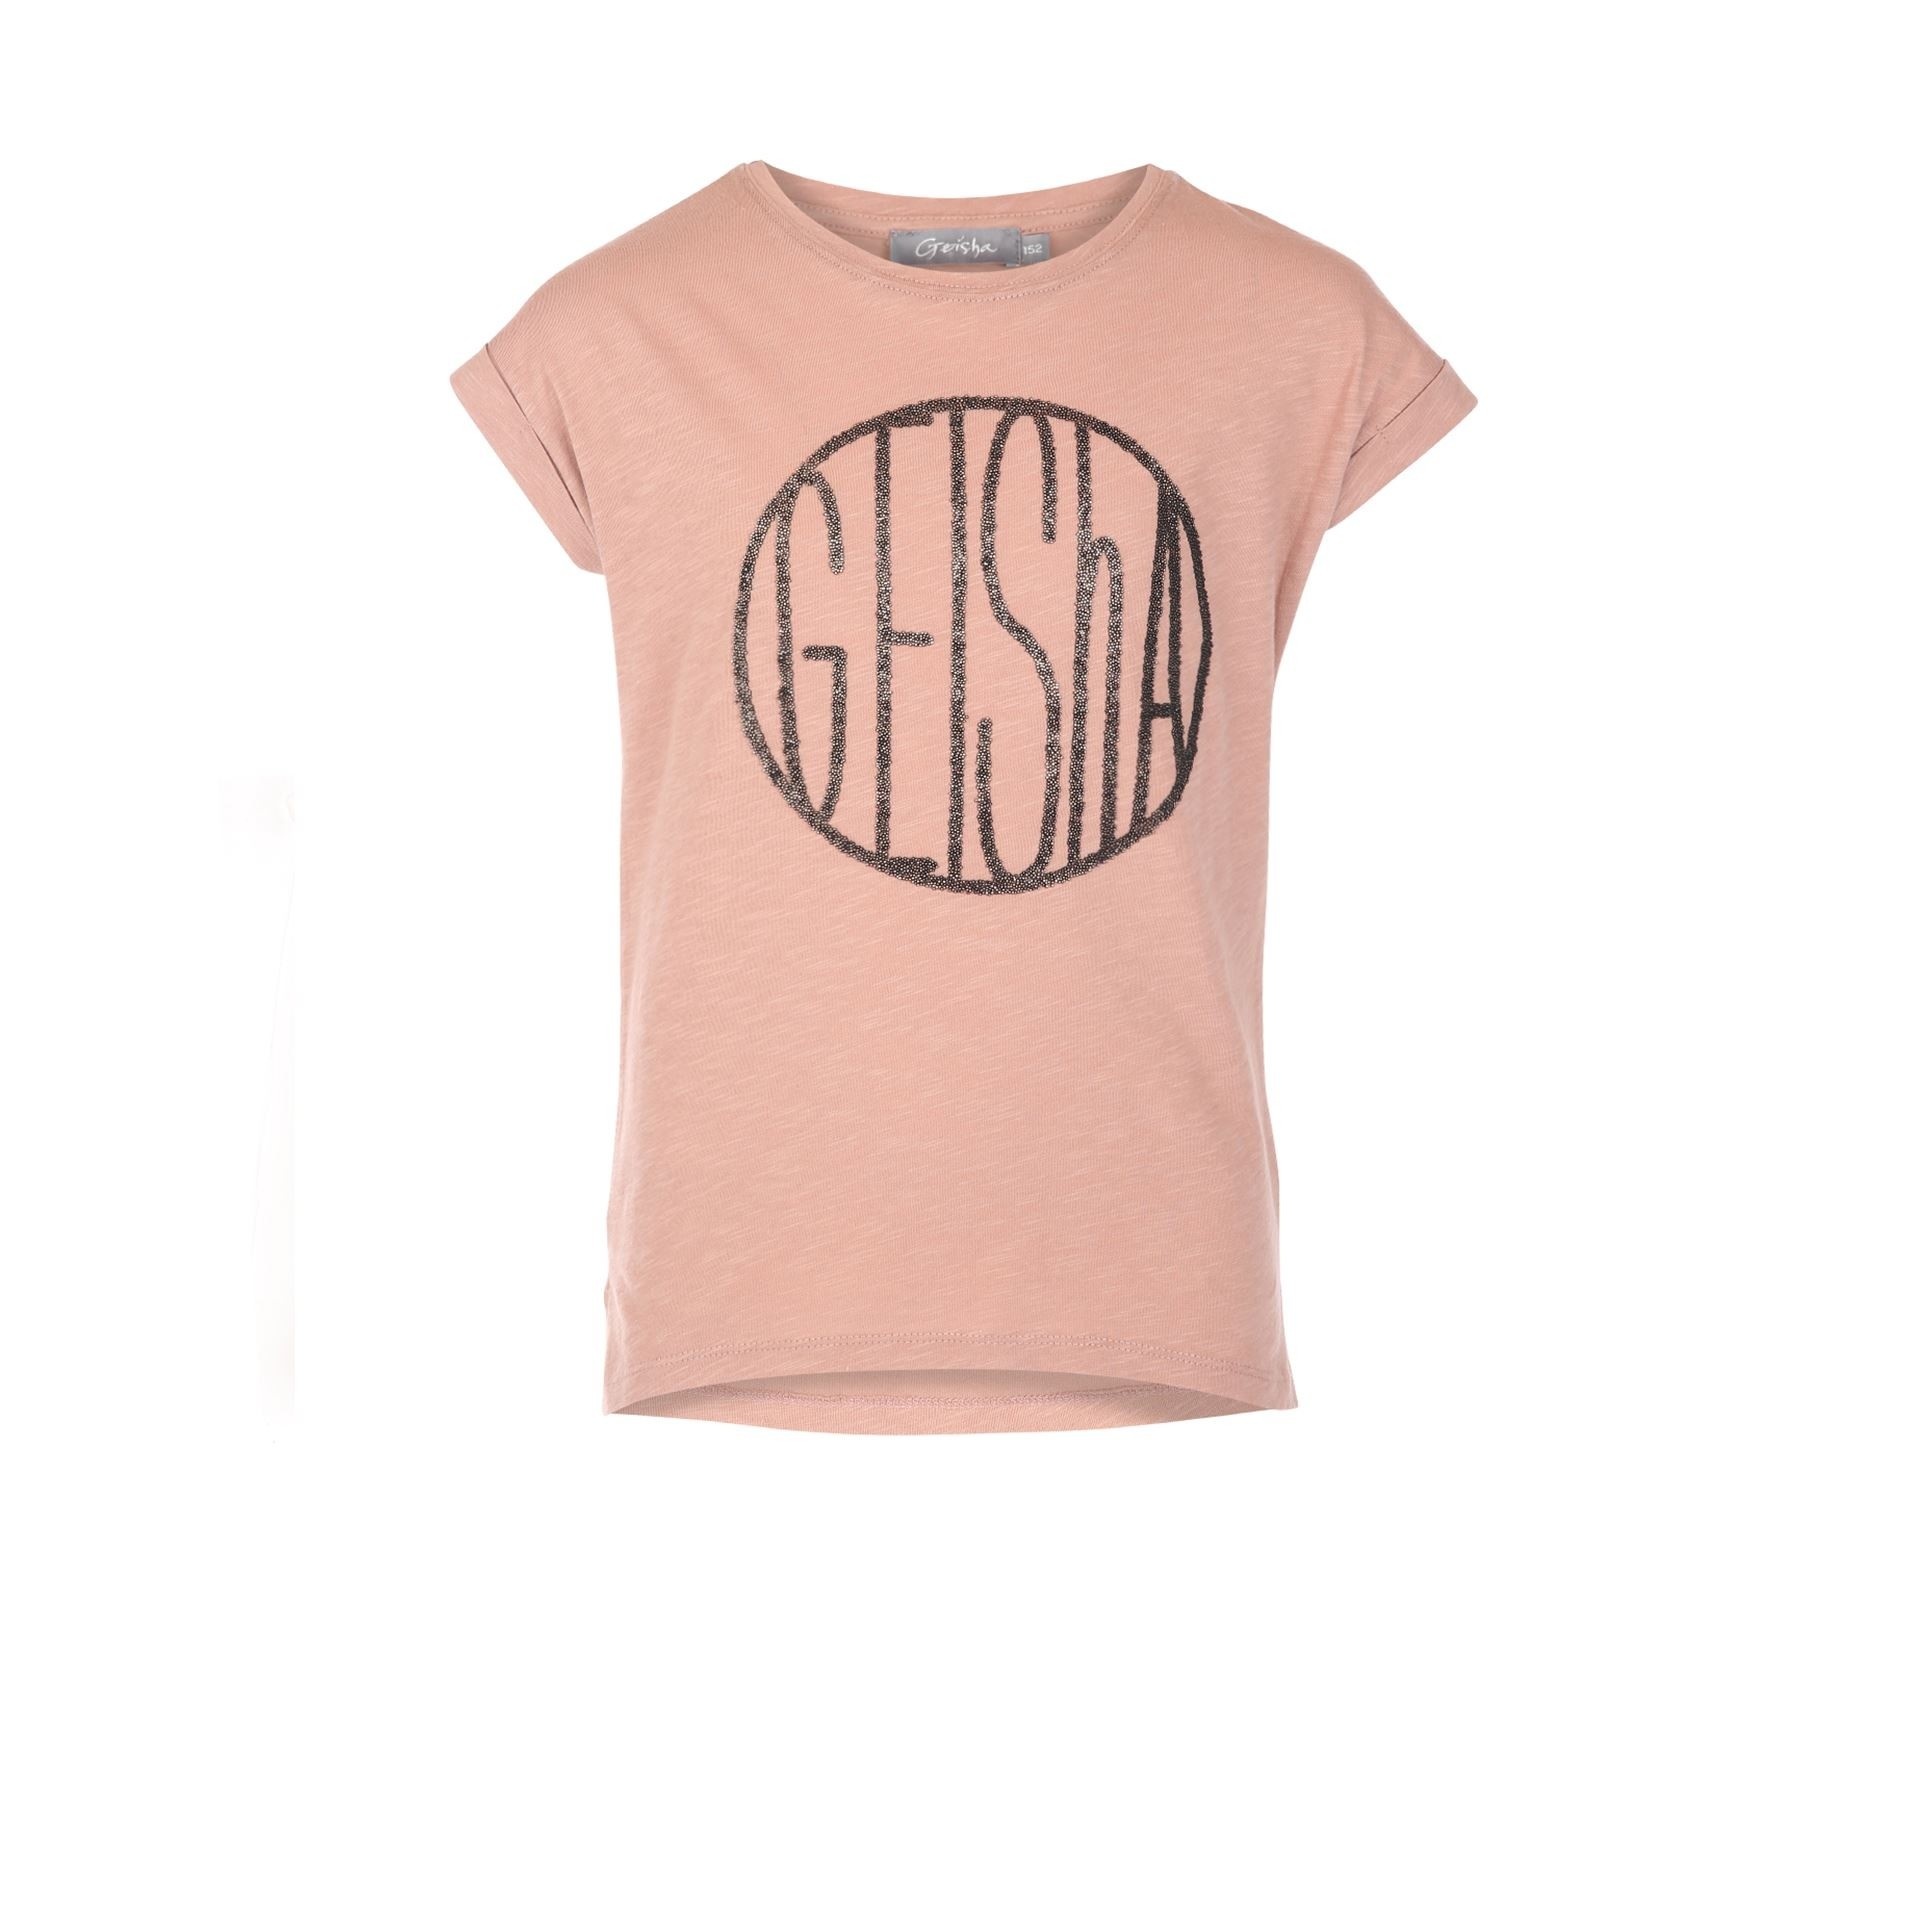 Geisha shirt 82043K-421 old pink zomercollectie kinderboetiek simone Simone